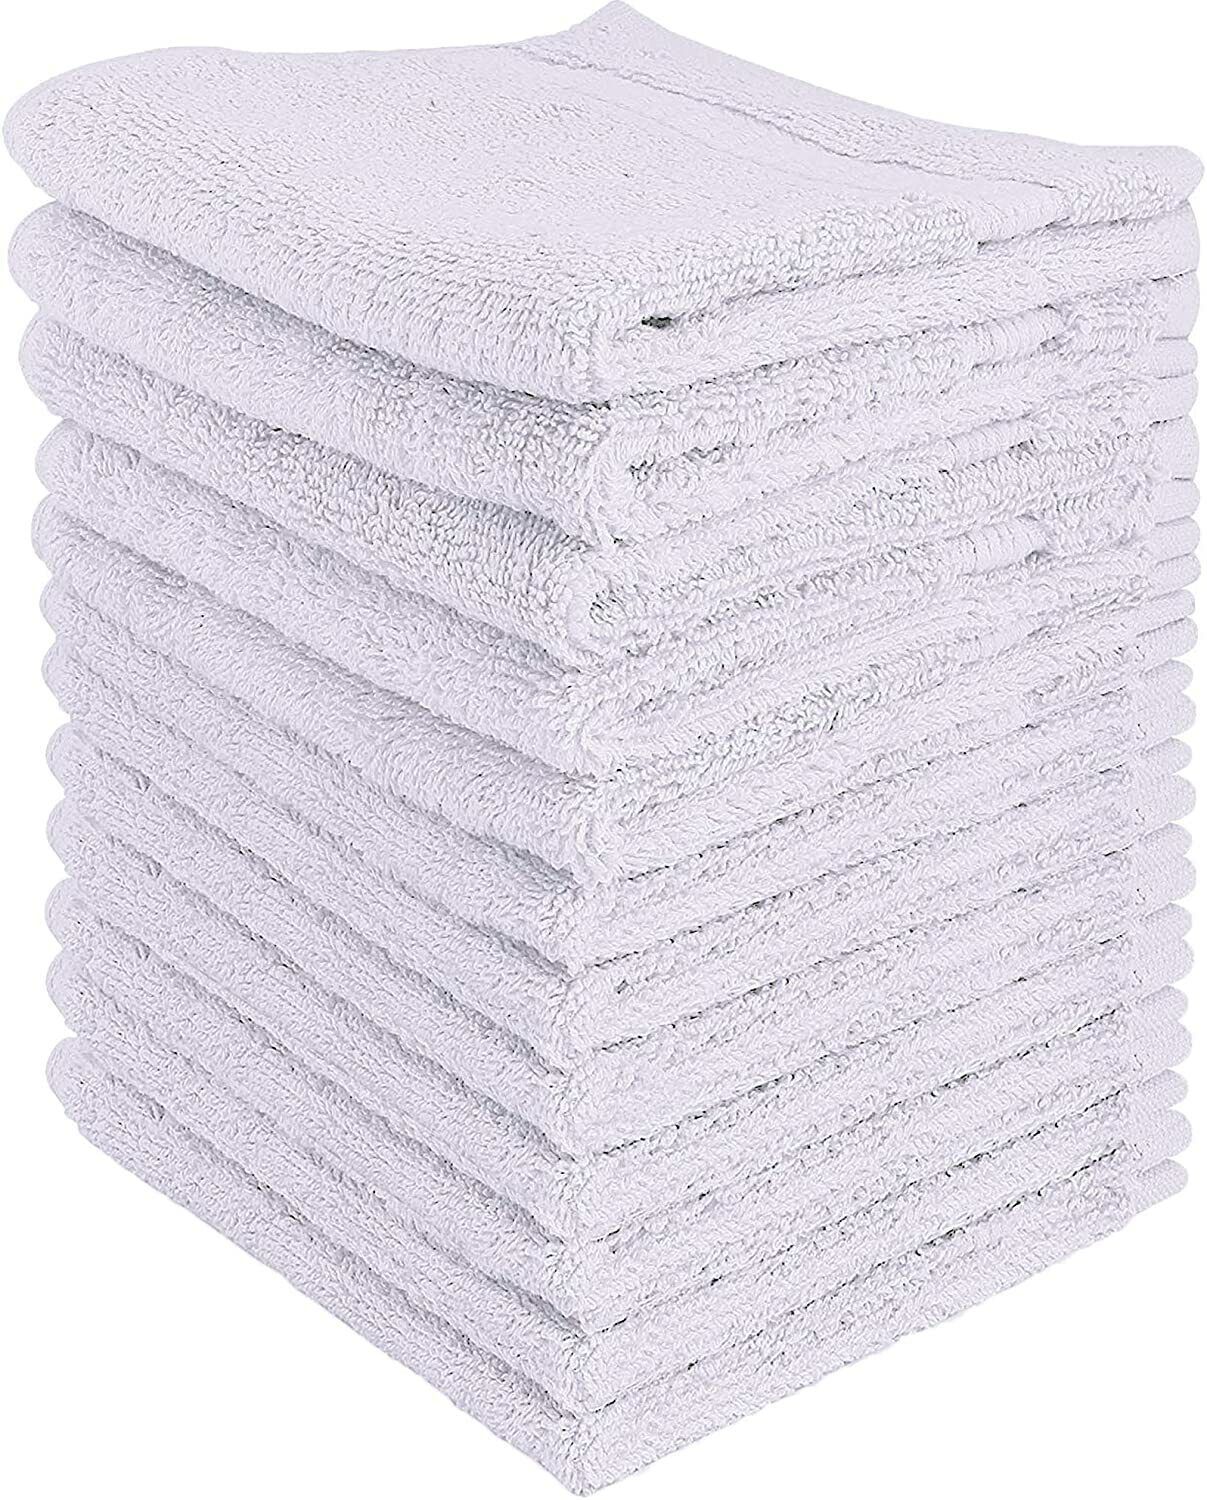 12 Pack Utopia Towels 600 GSM Premium Cotton White Washcloth Set 12 x 12 Inches - $35.99